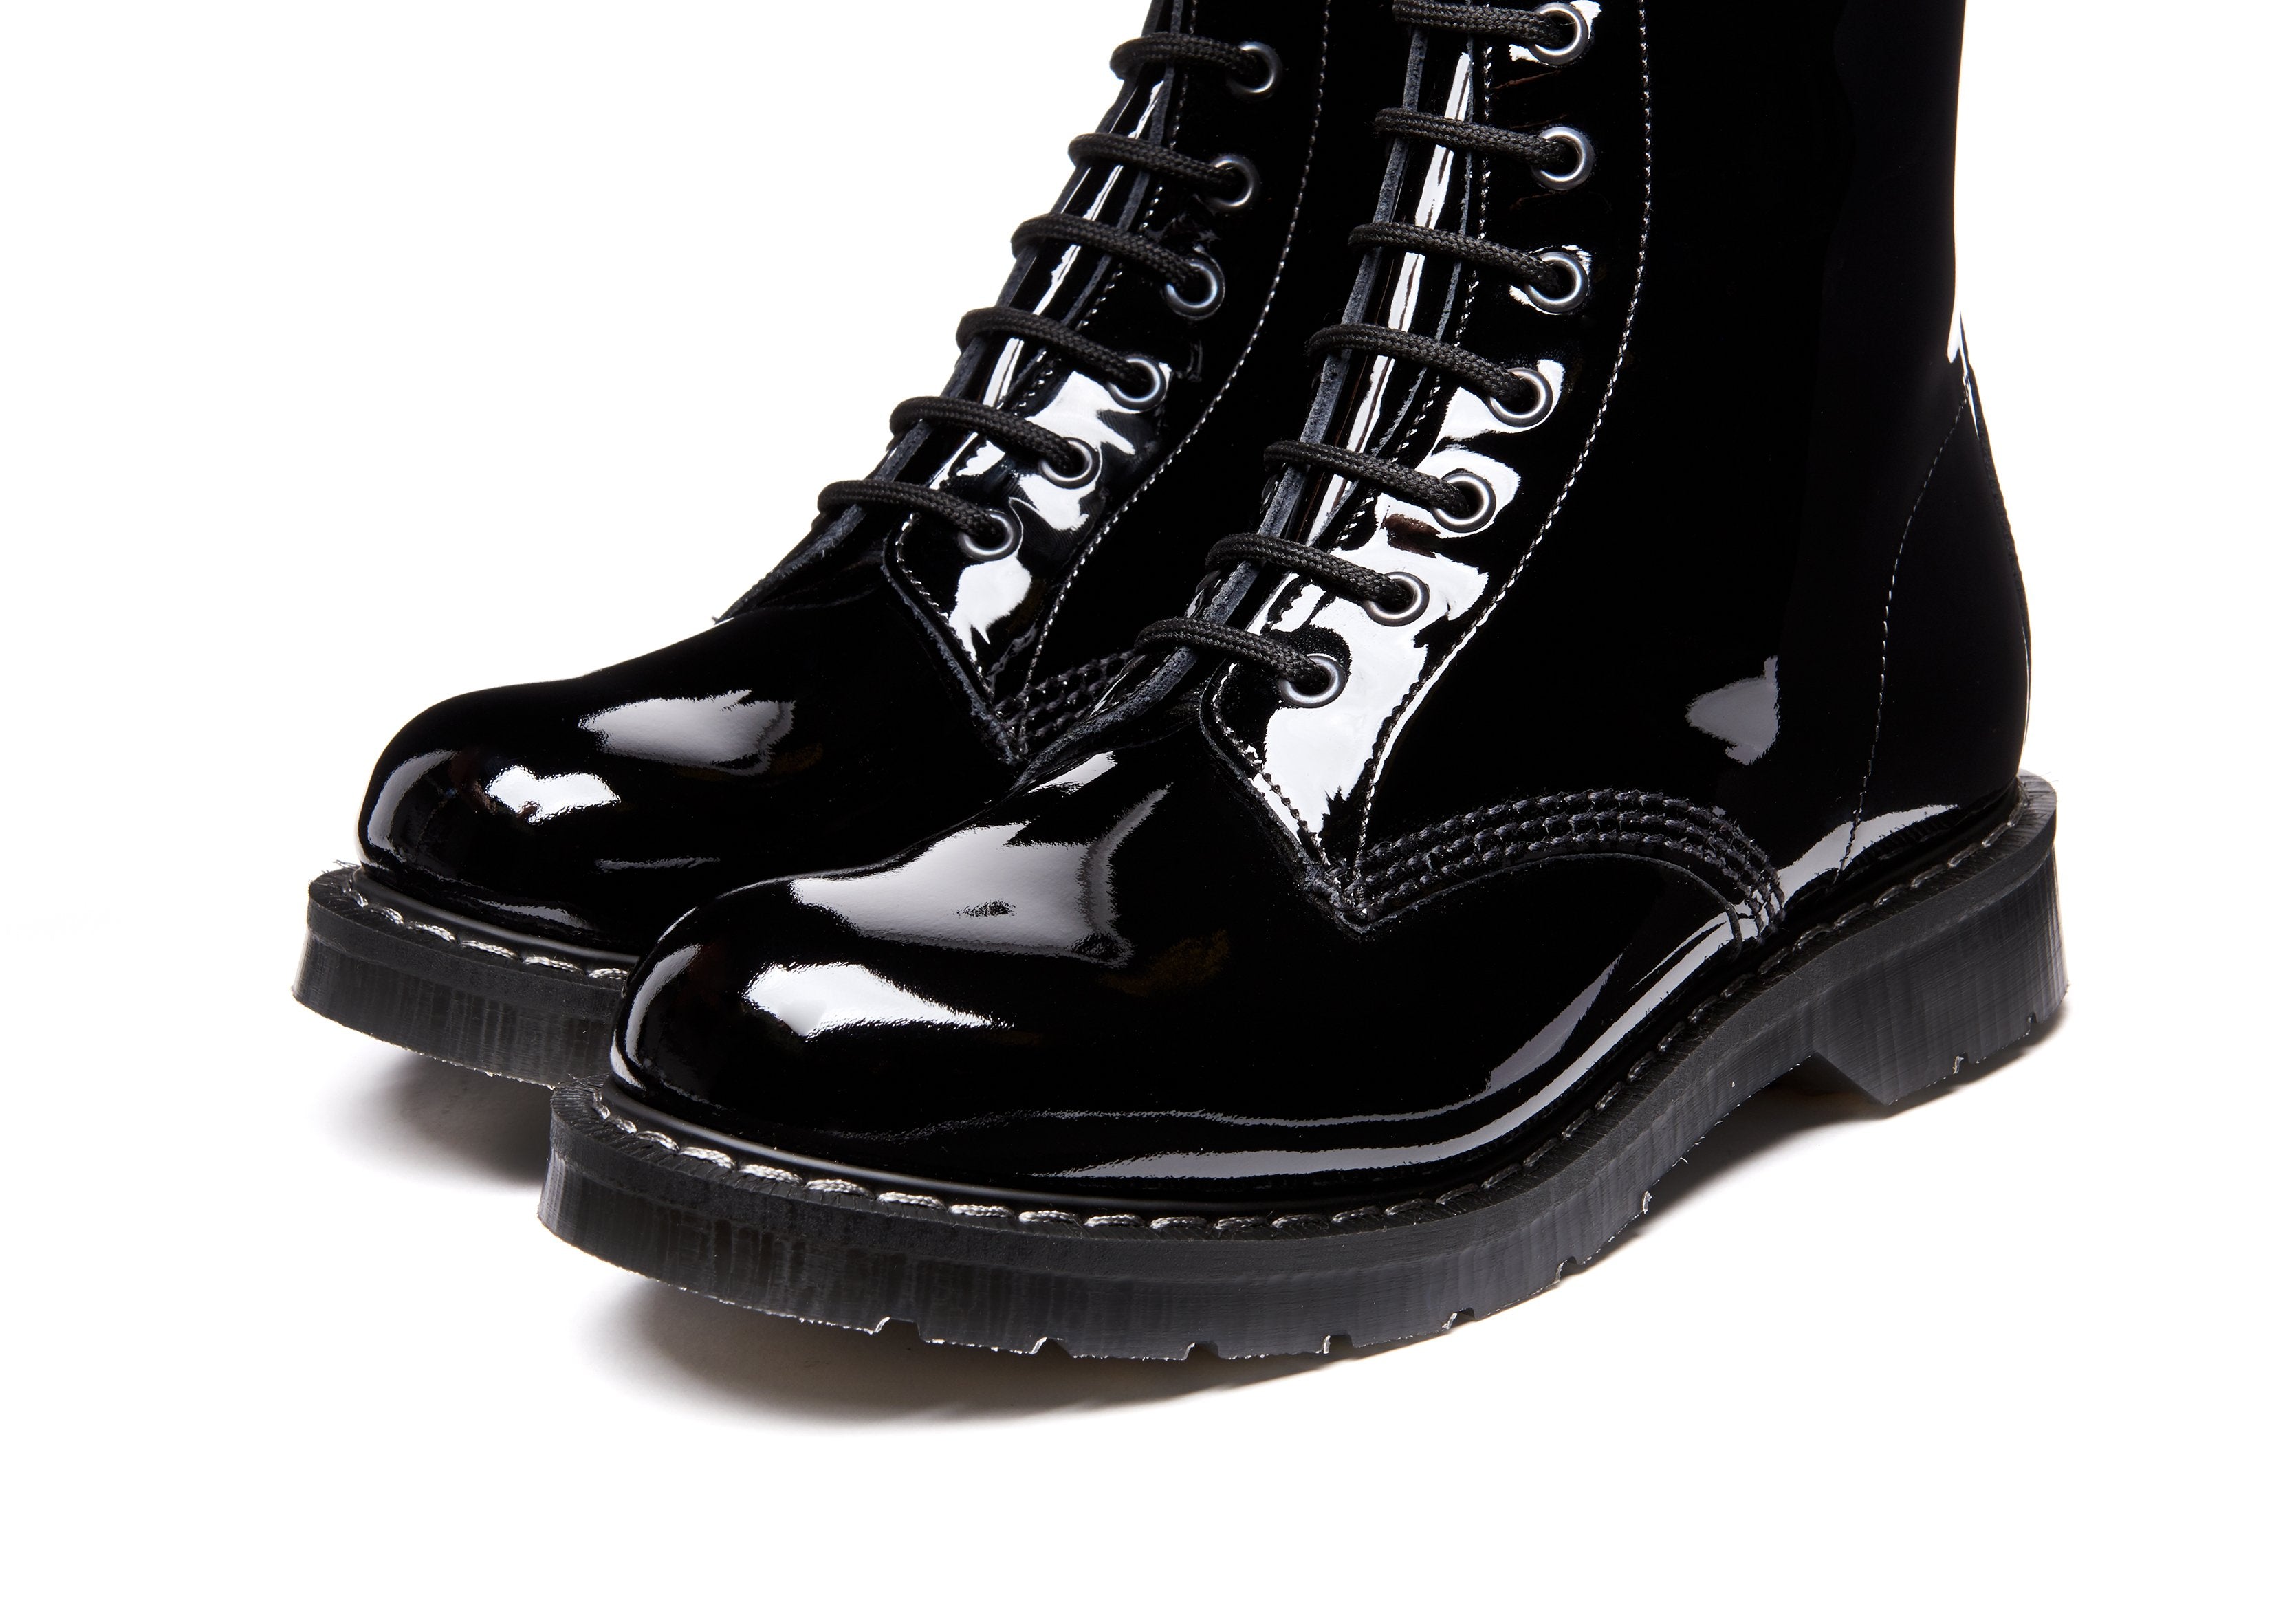 Black Patent 8 Eye Derby Boot | Solovair | Handmade in England 4.5 Mens / 5.5 Womens